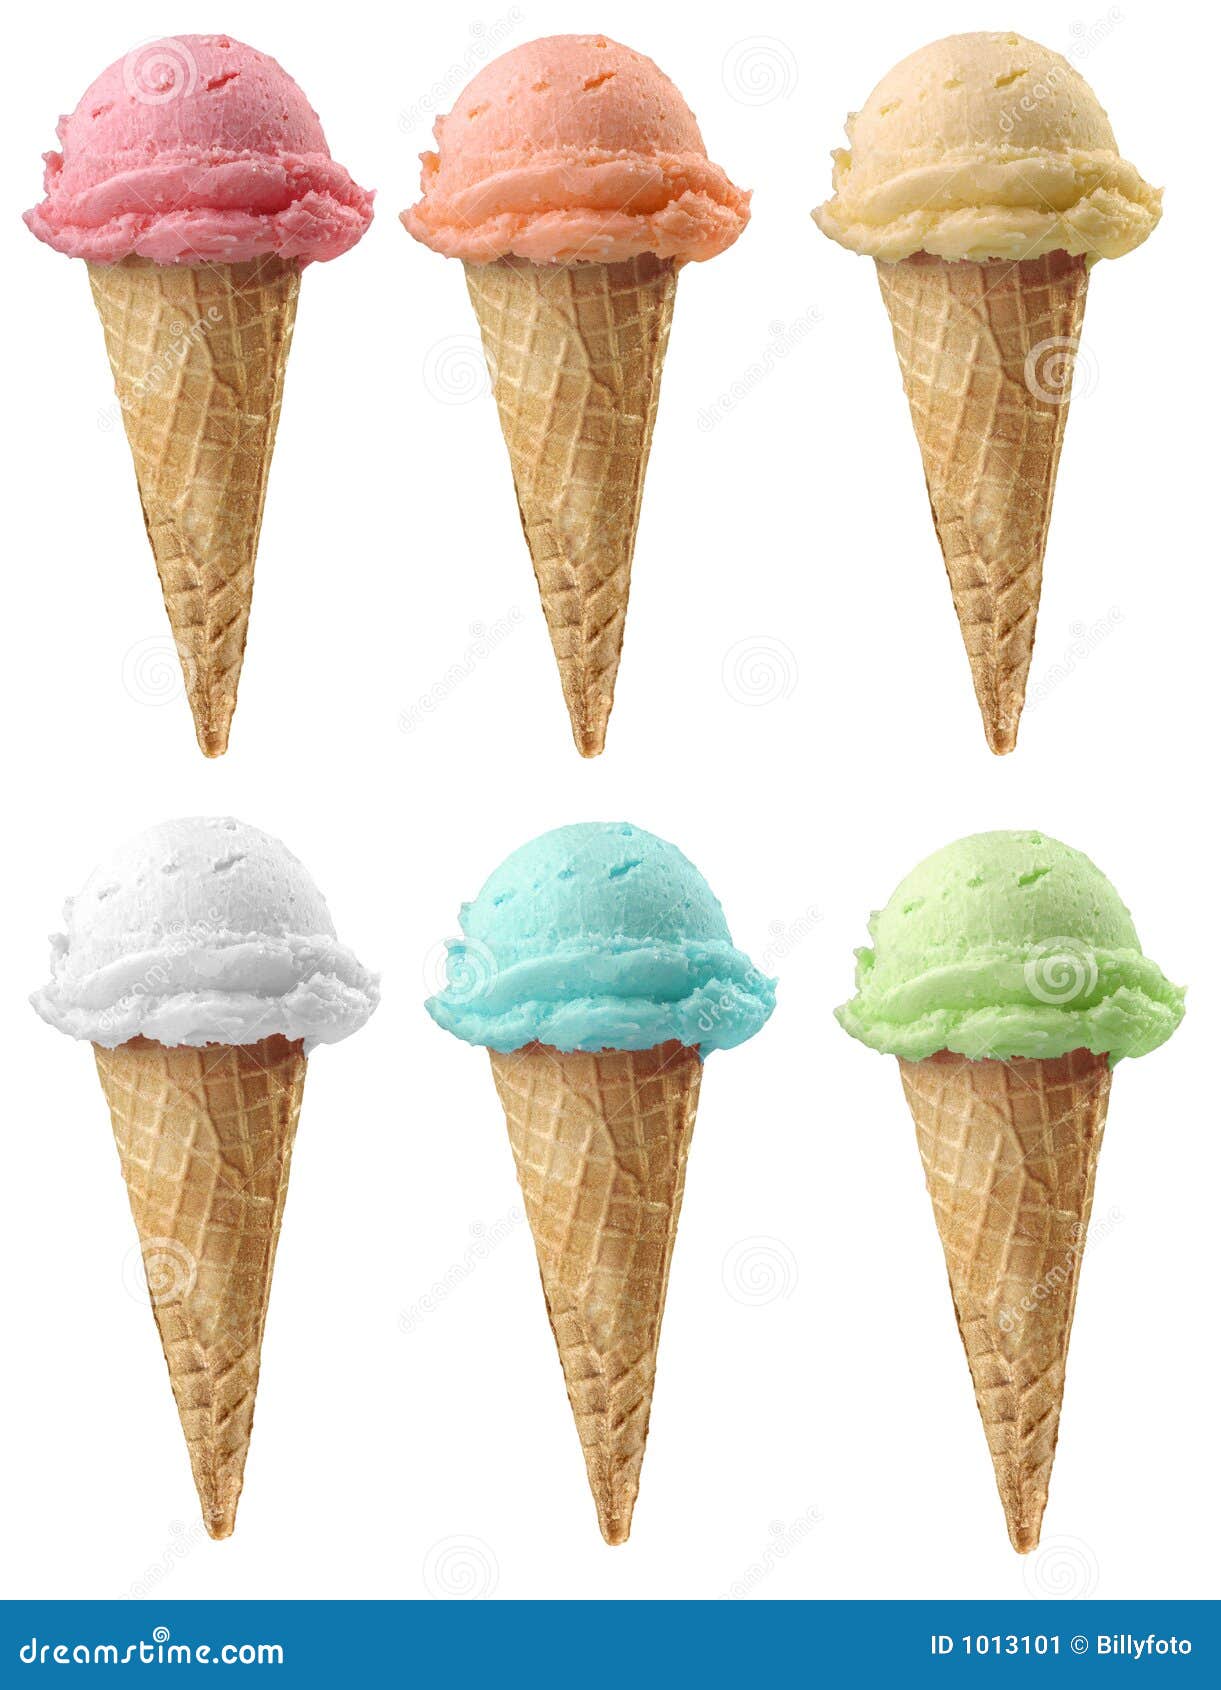 six ice cream cones of 6 different flavors